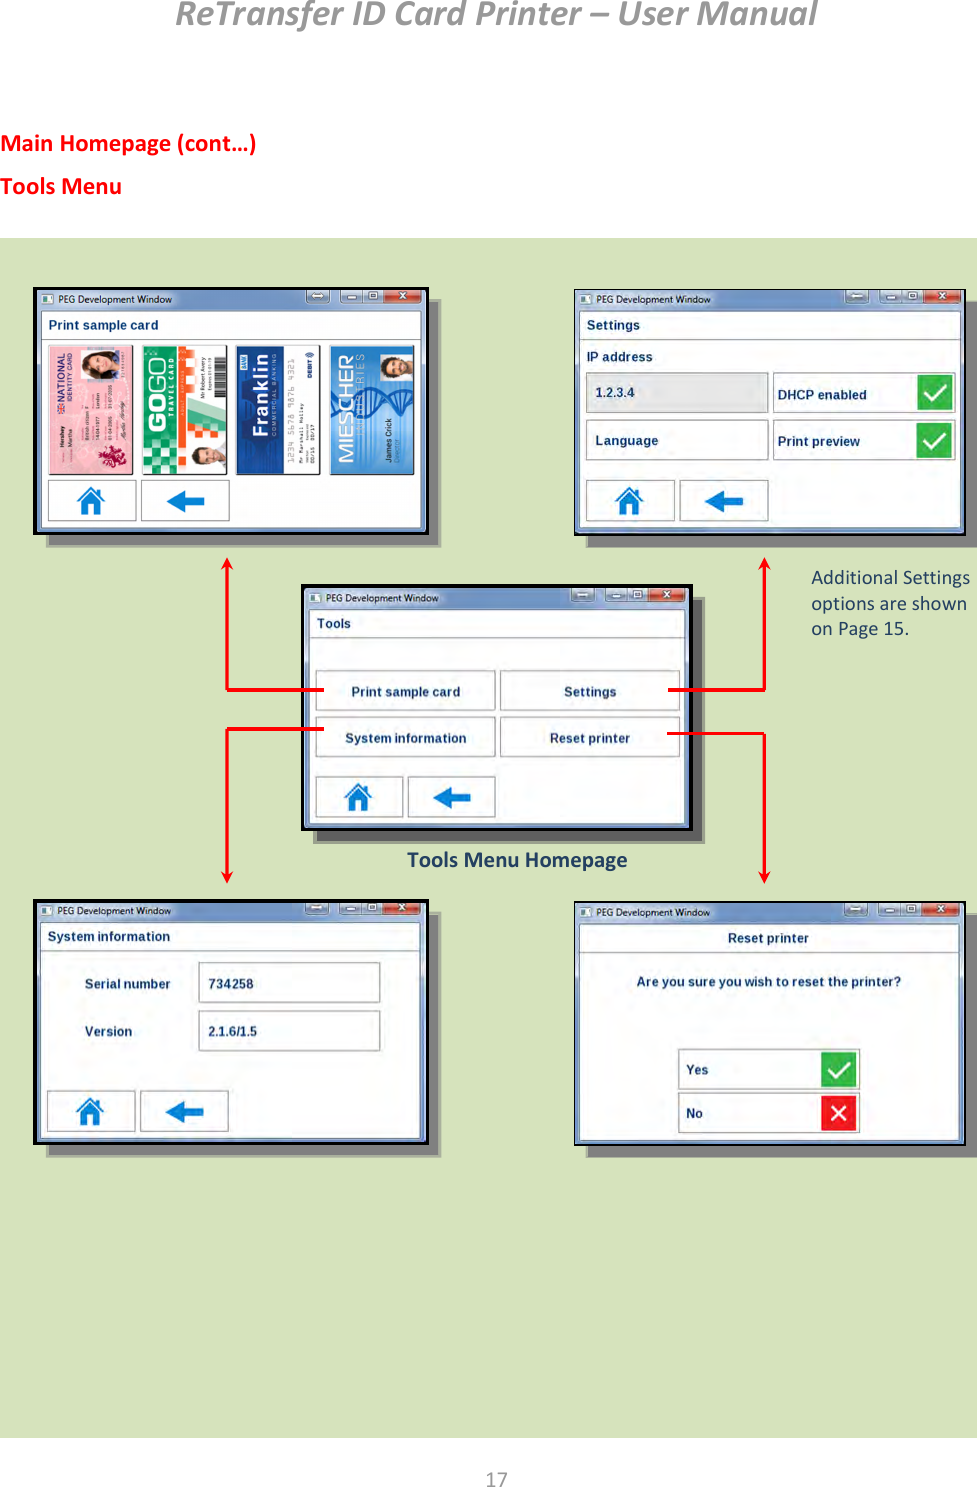 ReTransfer ID Card Printer – User Manual  17   Main Homepage (cont…) Tools Menu                        Tools Menu Homepage  Additional Settings options are shown on Page 15.  